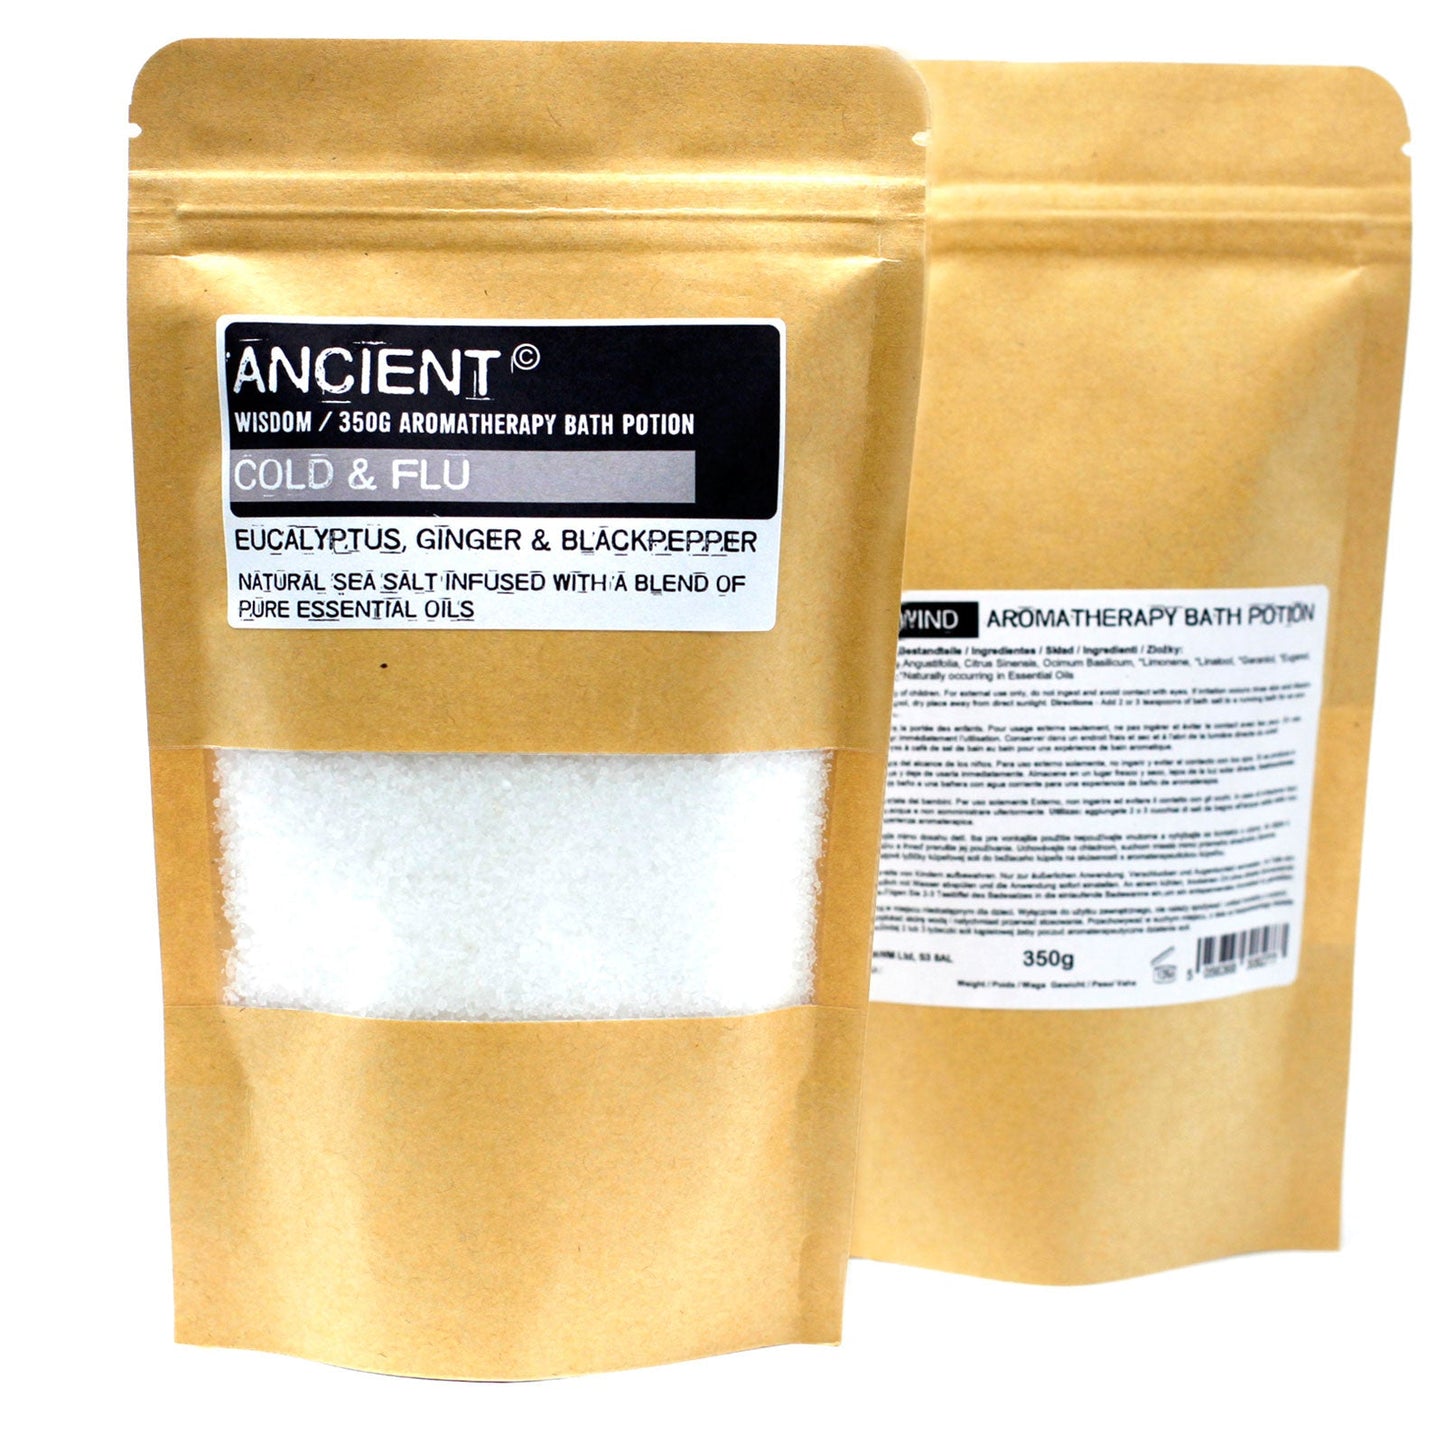 Aromatherapy Bath Potions - Bath Salts Aromatherapy Bath Potions Soul Inspired Colds & Flu - Eucalyptus, Ginger & Blackpepper 